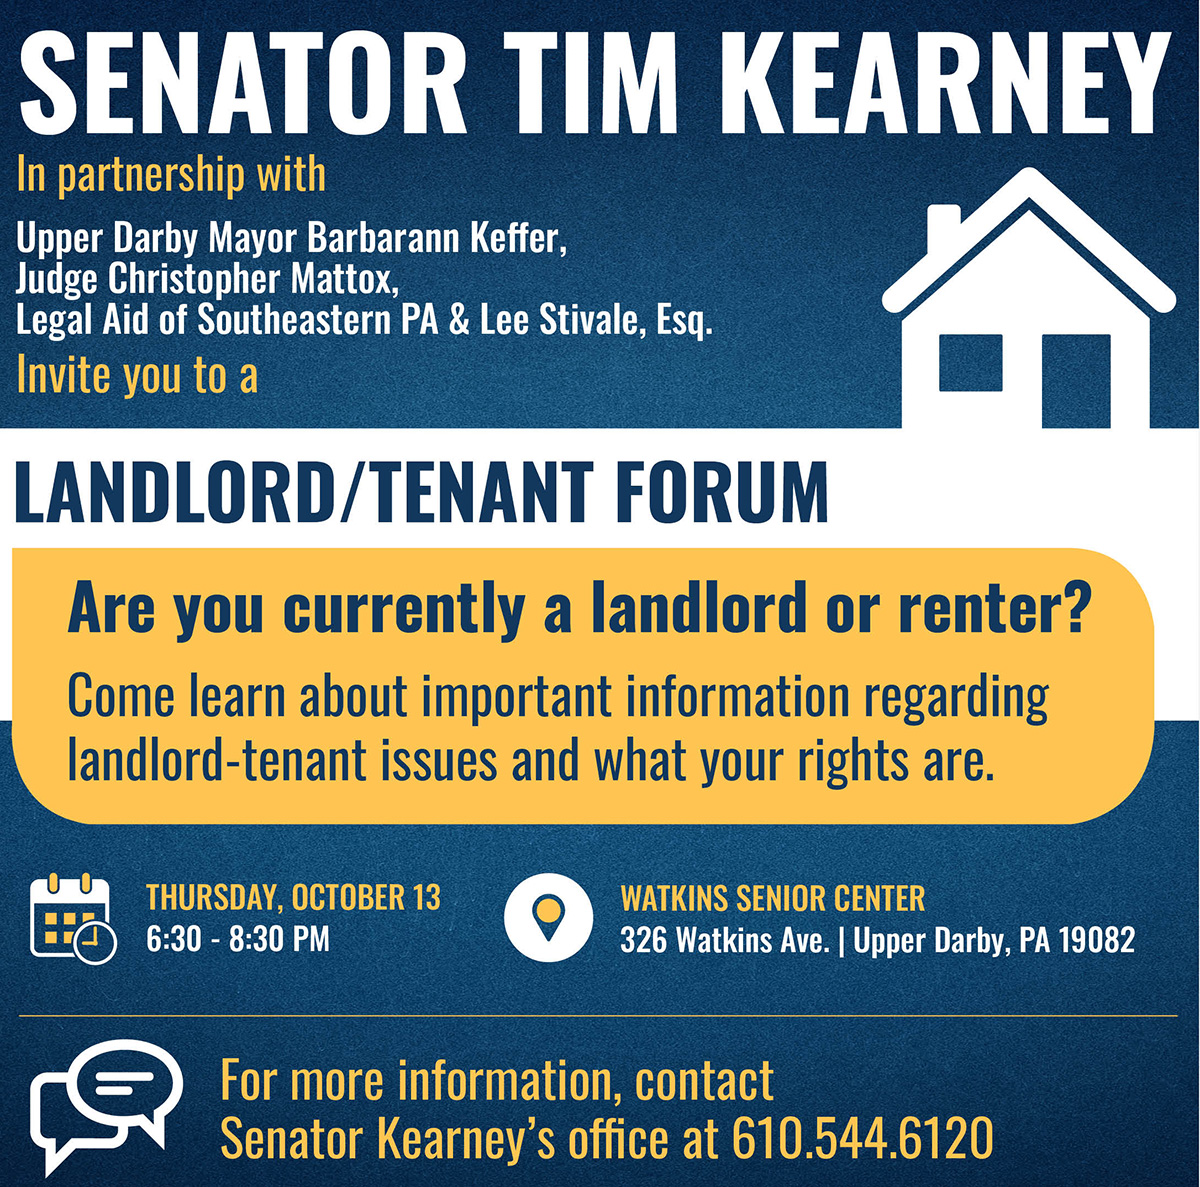 Landlord/Tenant Forum - October 13, 2022